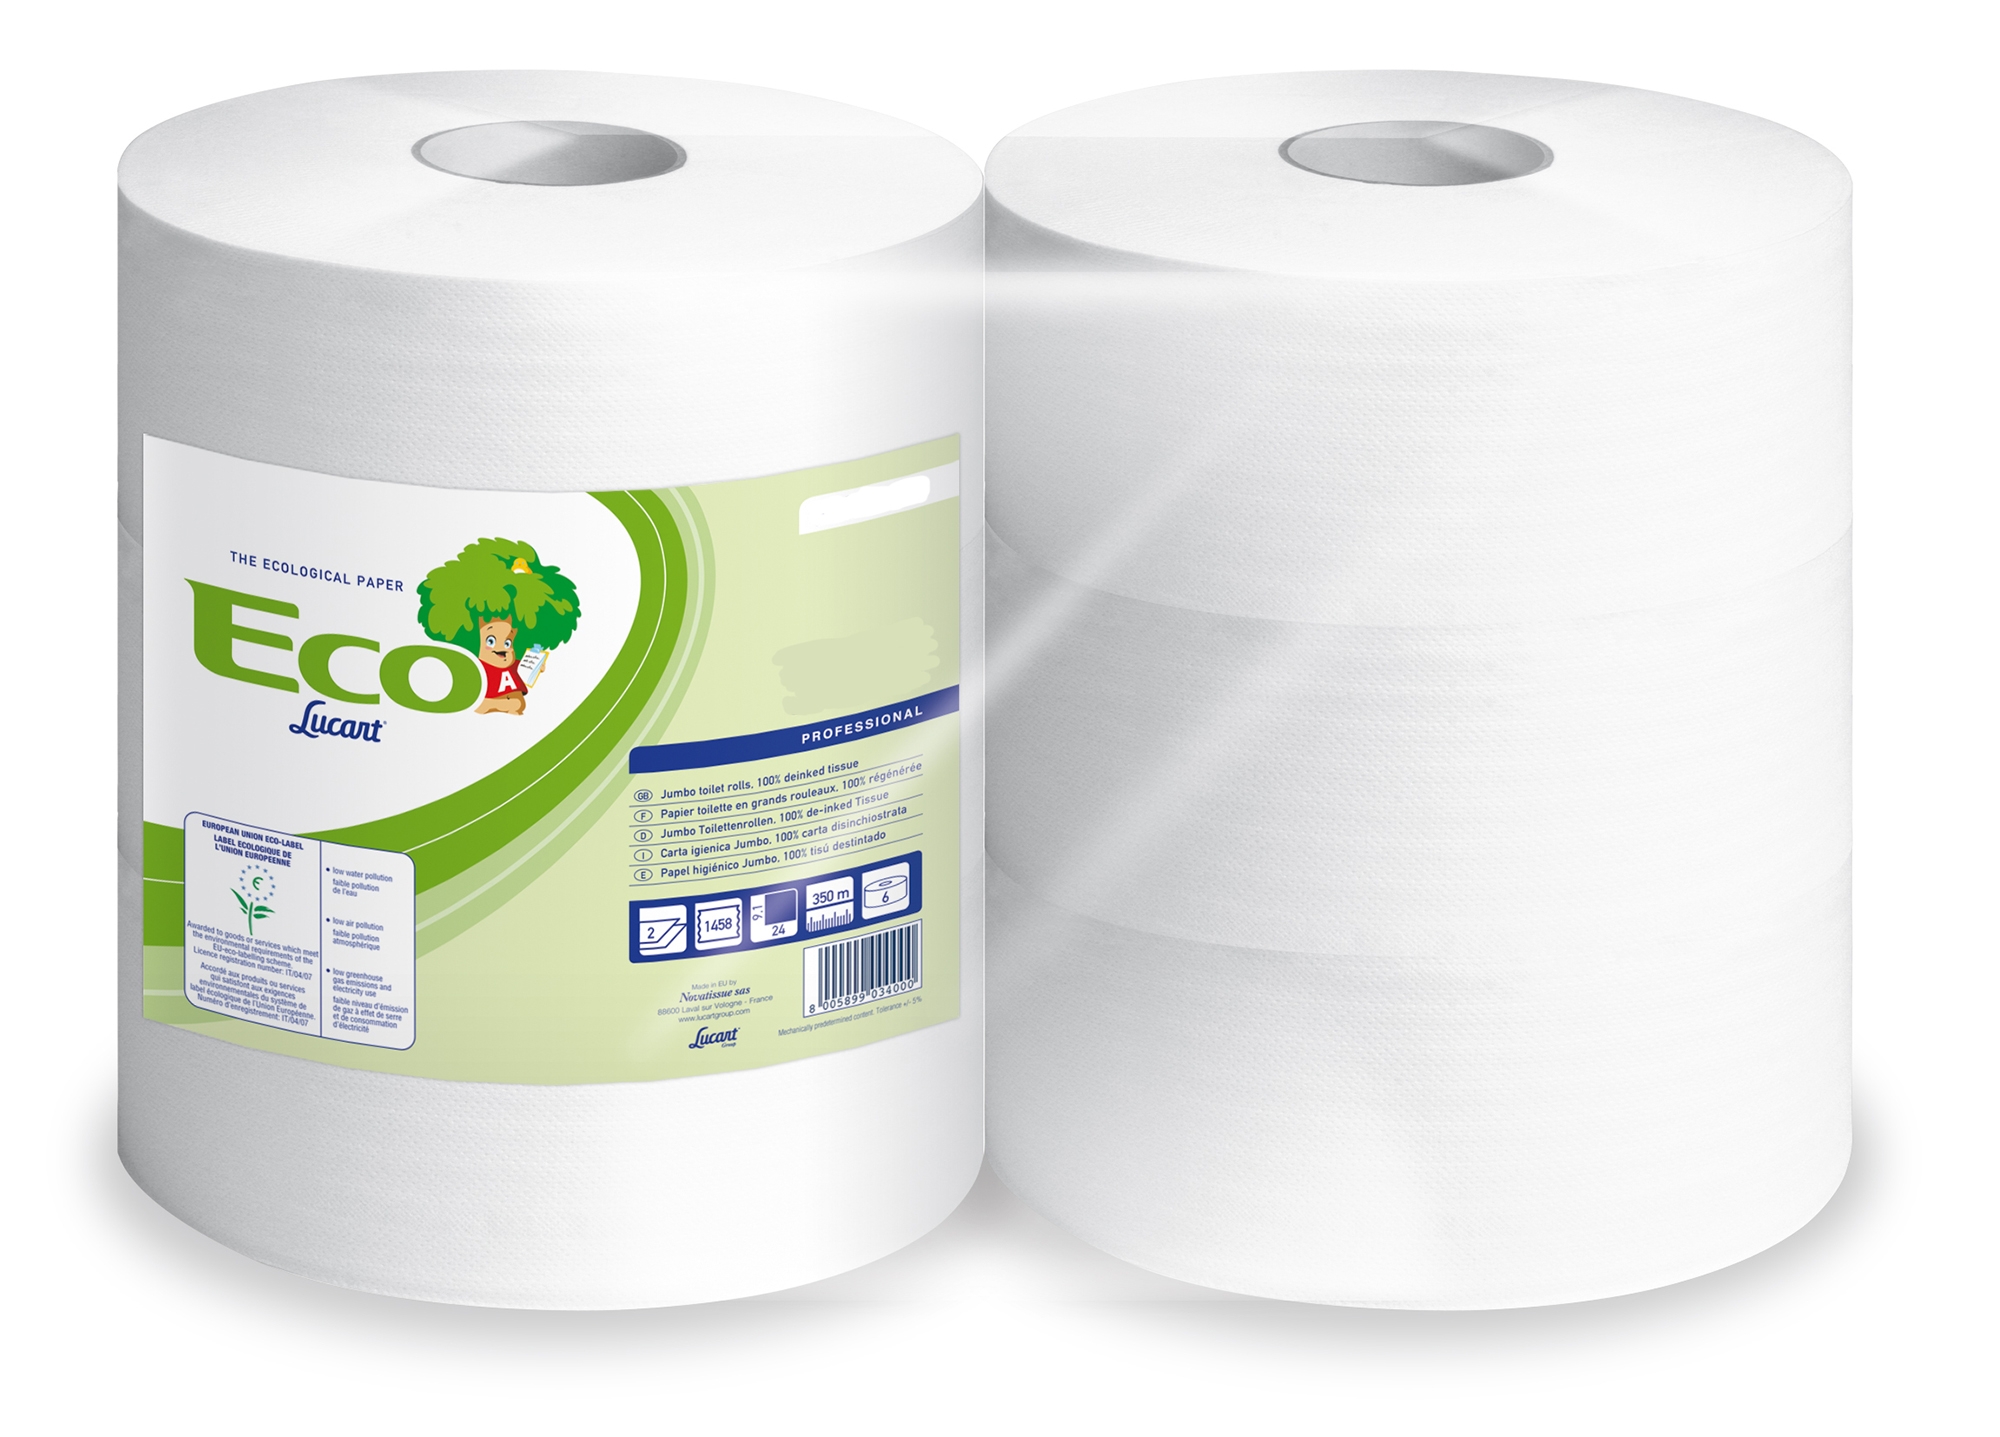 Papier toilette Hygiénique Maxi JUMBO 2 Plis - Blanc - 350m